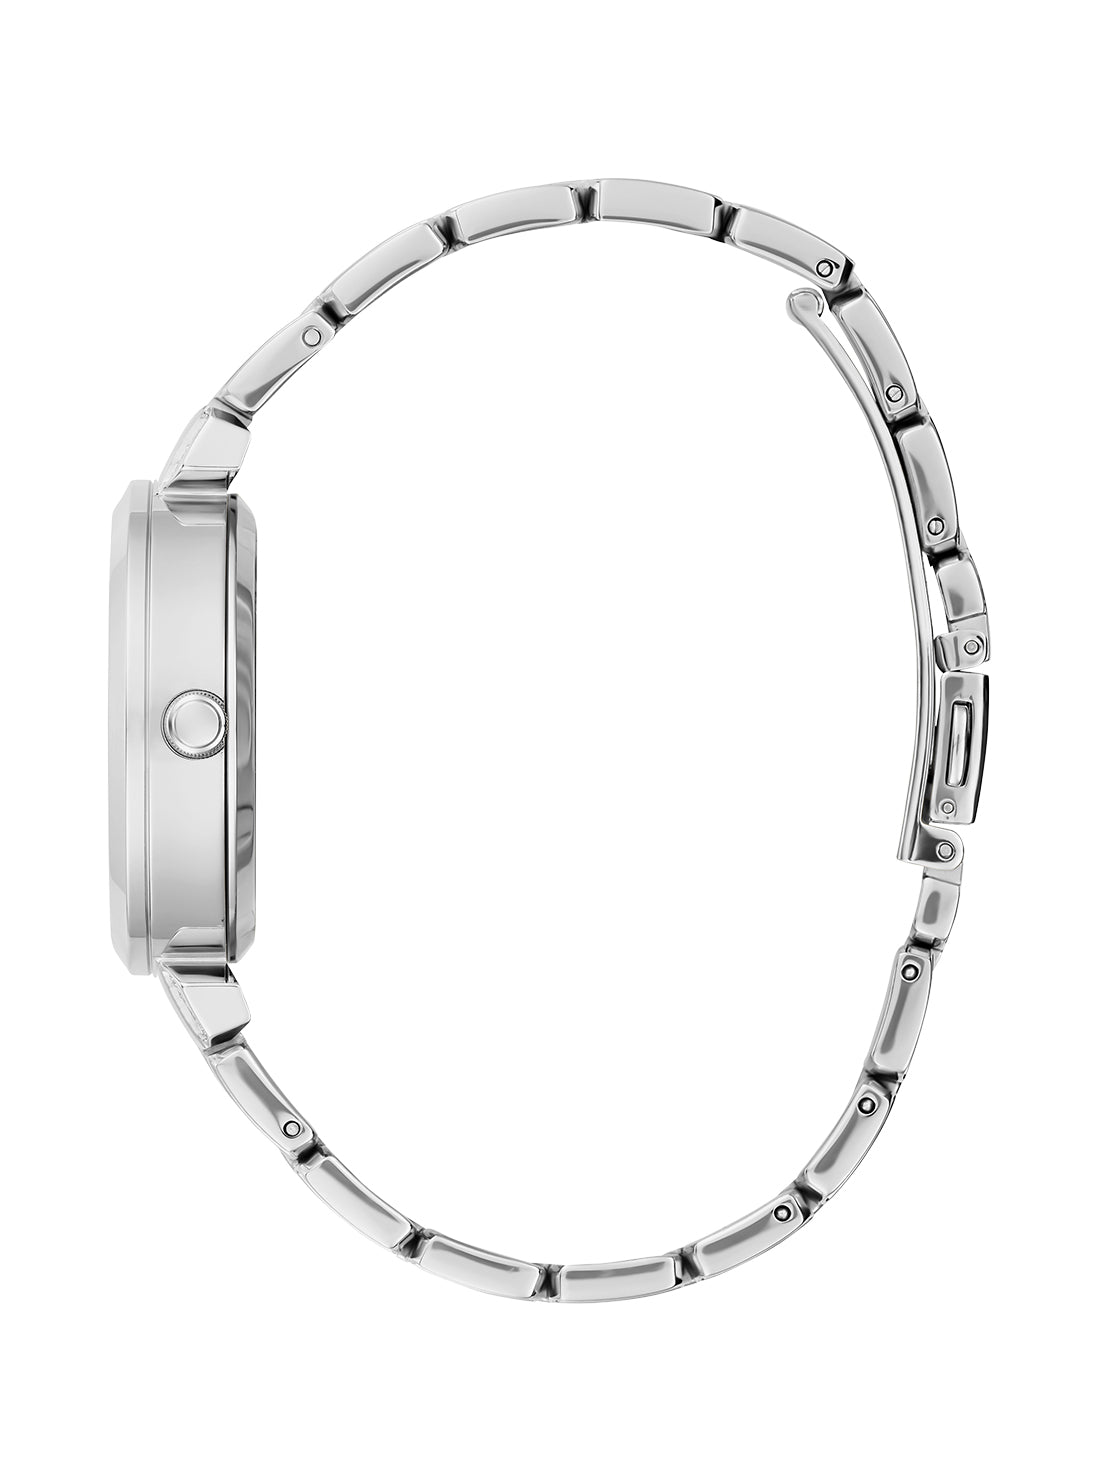 GUESS Women's Silver Crystal Clear Glitz Watch GW0470L1 Side View